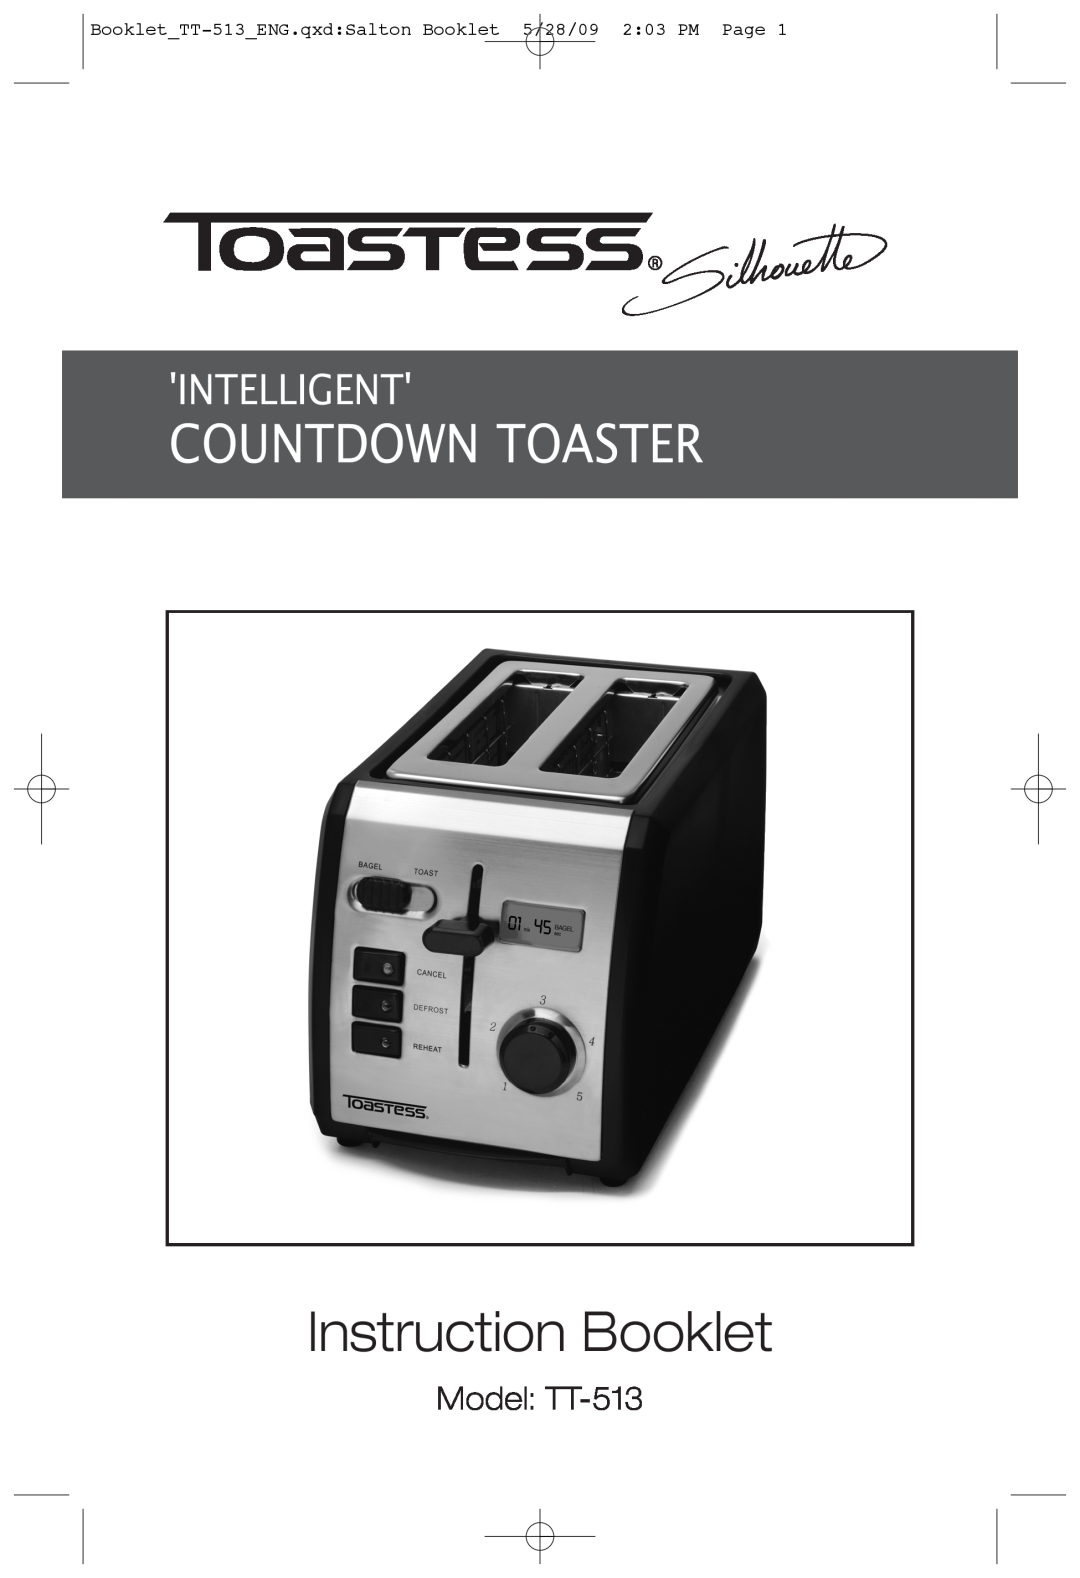 Toastess manual Model TT-513, Instruction Booklet, Countdown Toaster, Intelligent 